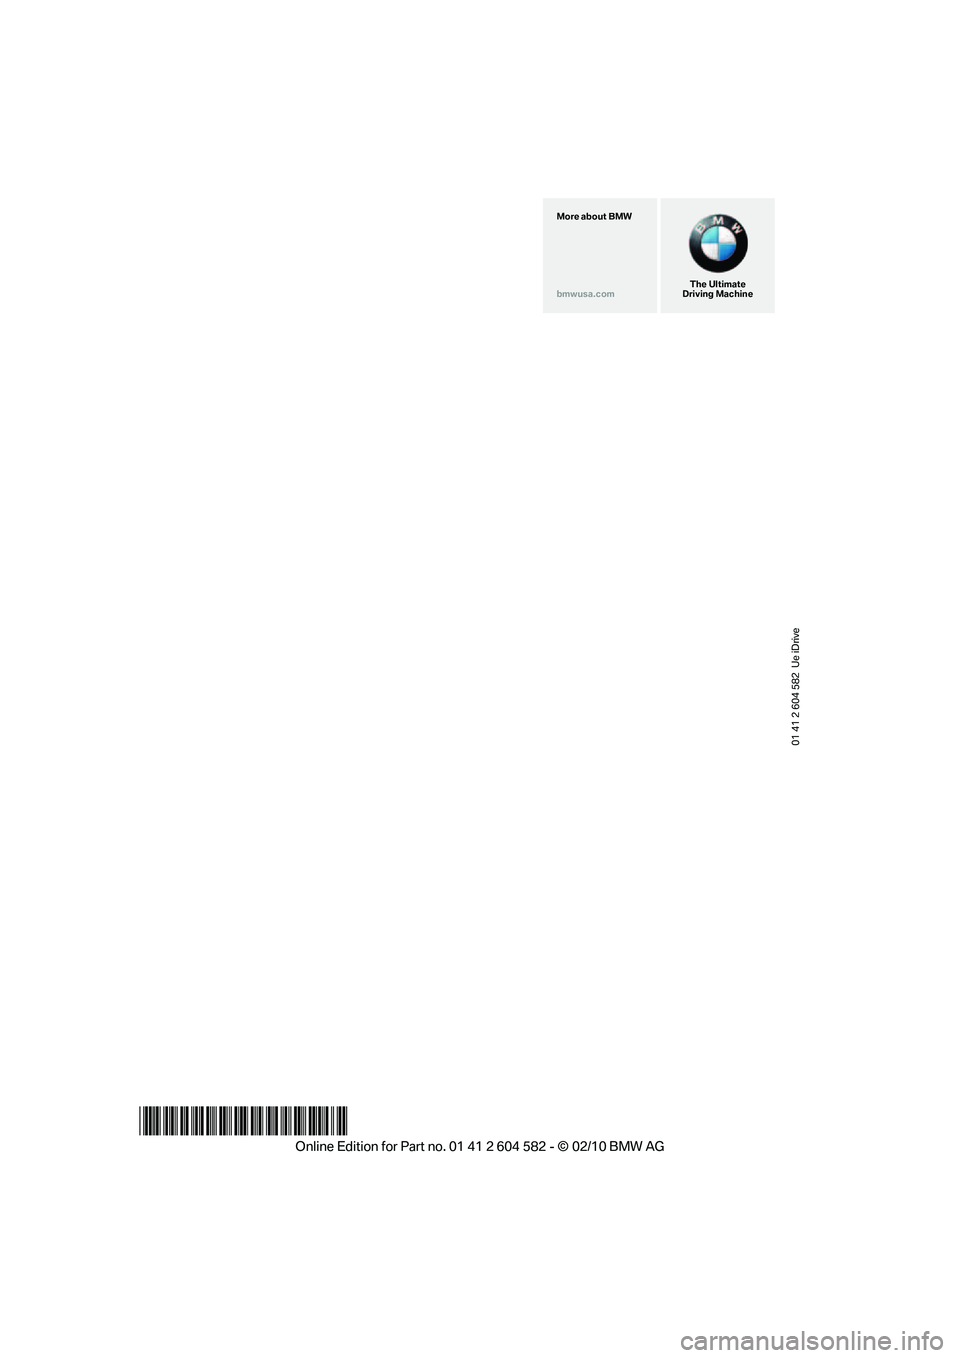 BMW 335I XDRIVE SEDAN 2011  Owners Manual 01 41 2 604 582  Ue iDrive
*BL260458200R*
The Ultimate
Driving Machine More about BMW
bmwusa.com 